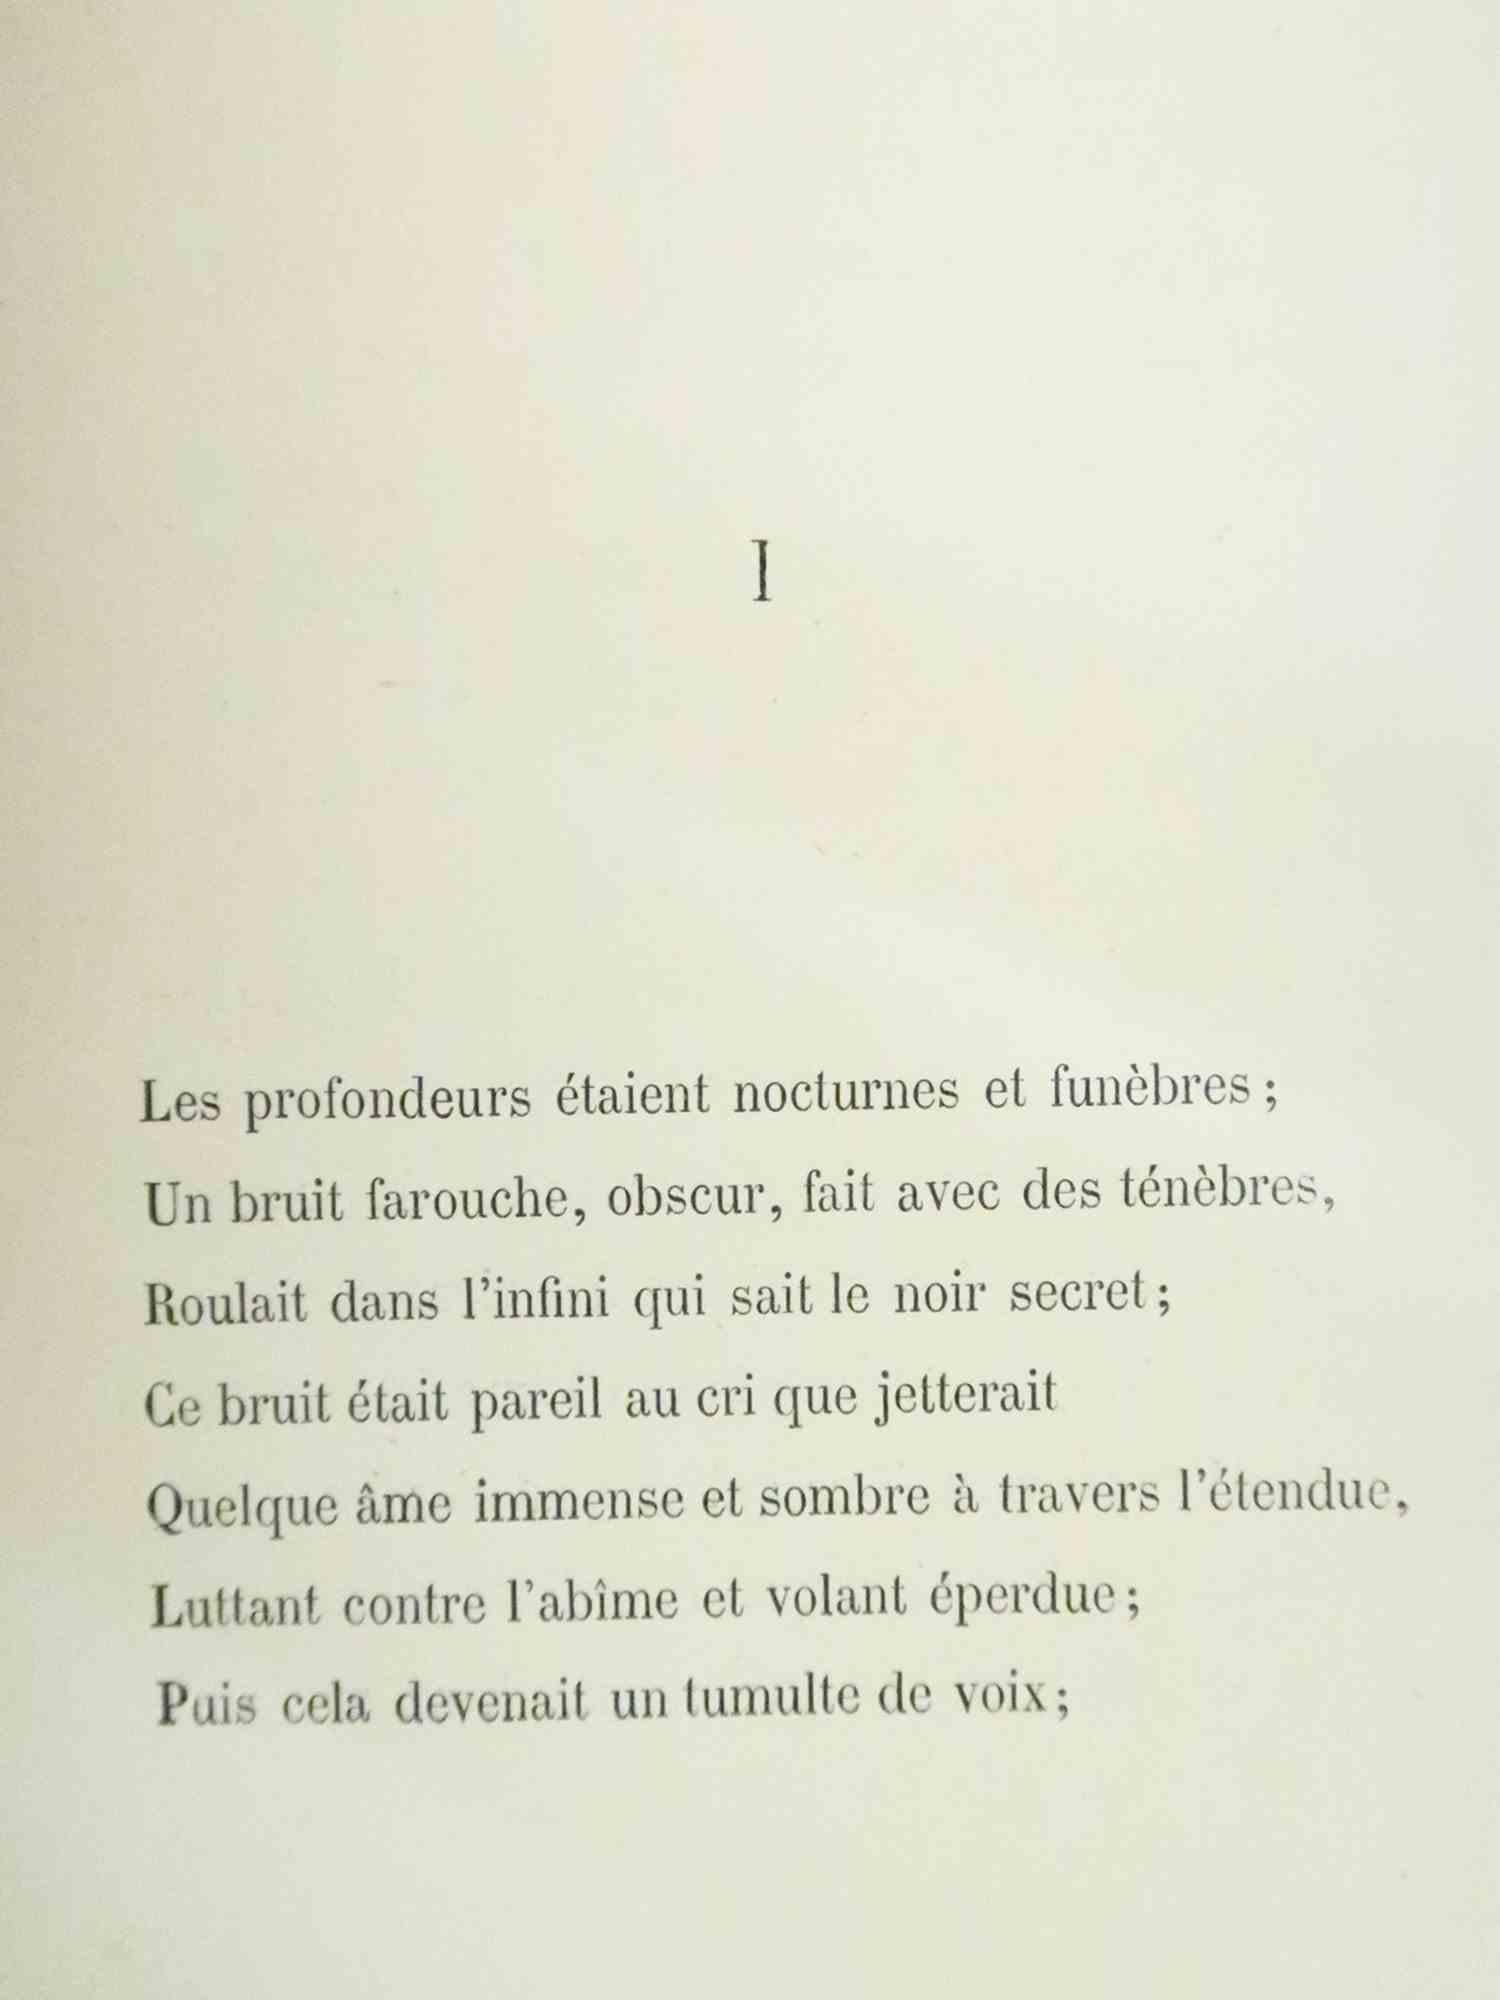 La Pitié Suprême - Rare Book by Victor Hugo - 1879 For Sale 3